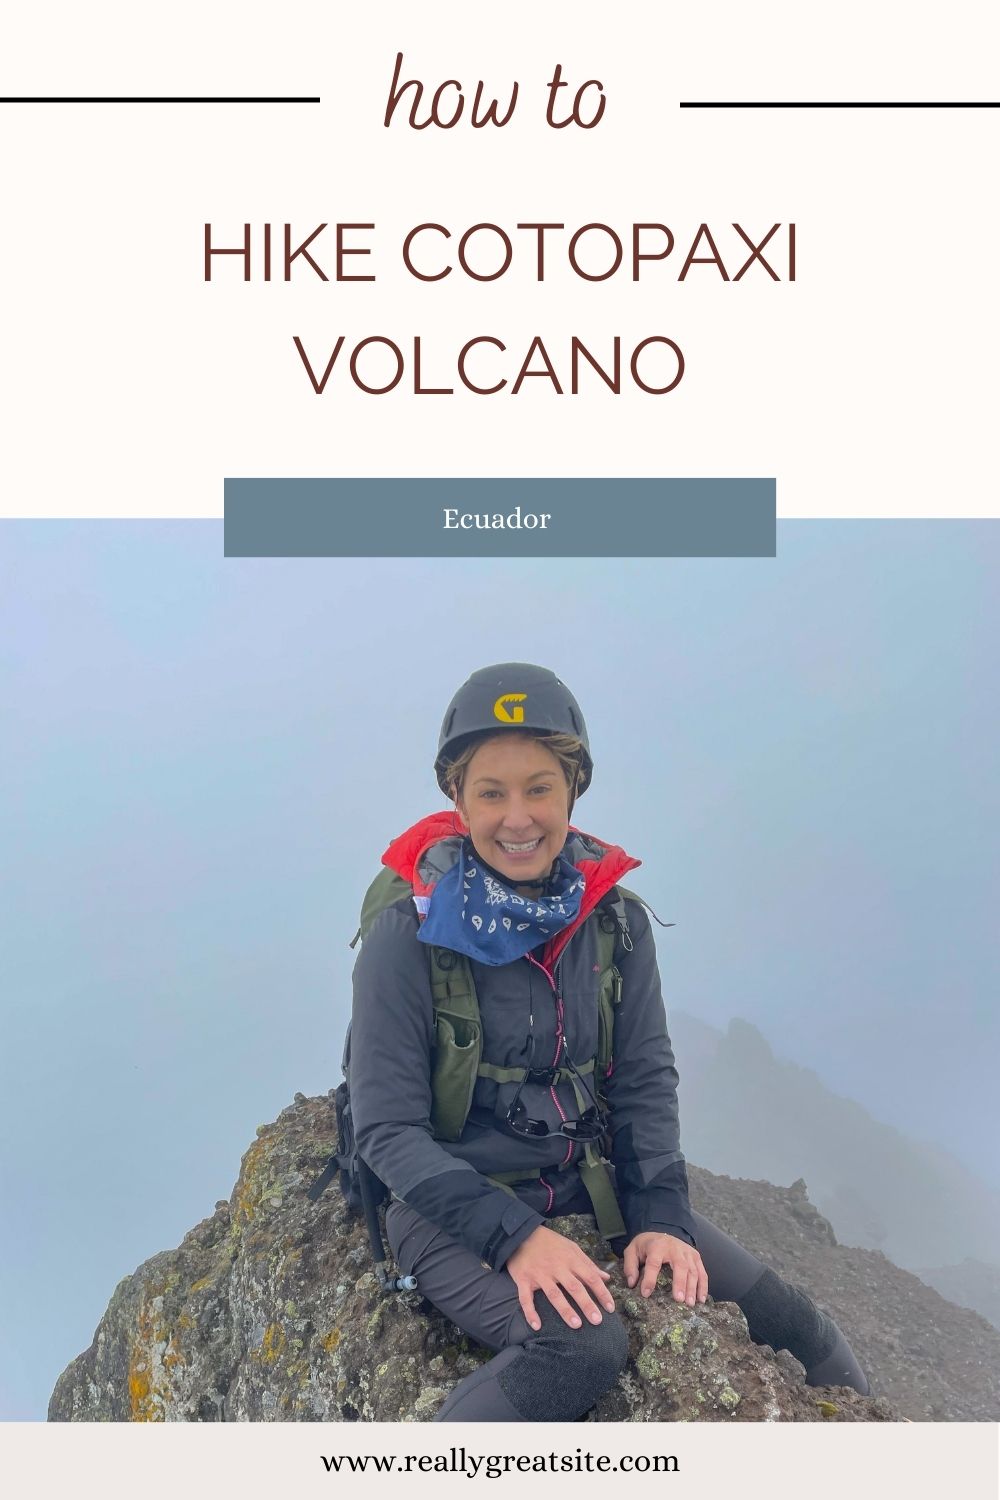 How to hike Cotopaxi Volcano in Ecuador, one of the world's tallest volcanoes #climbing #ecuador